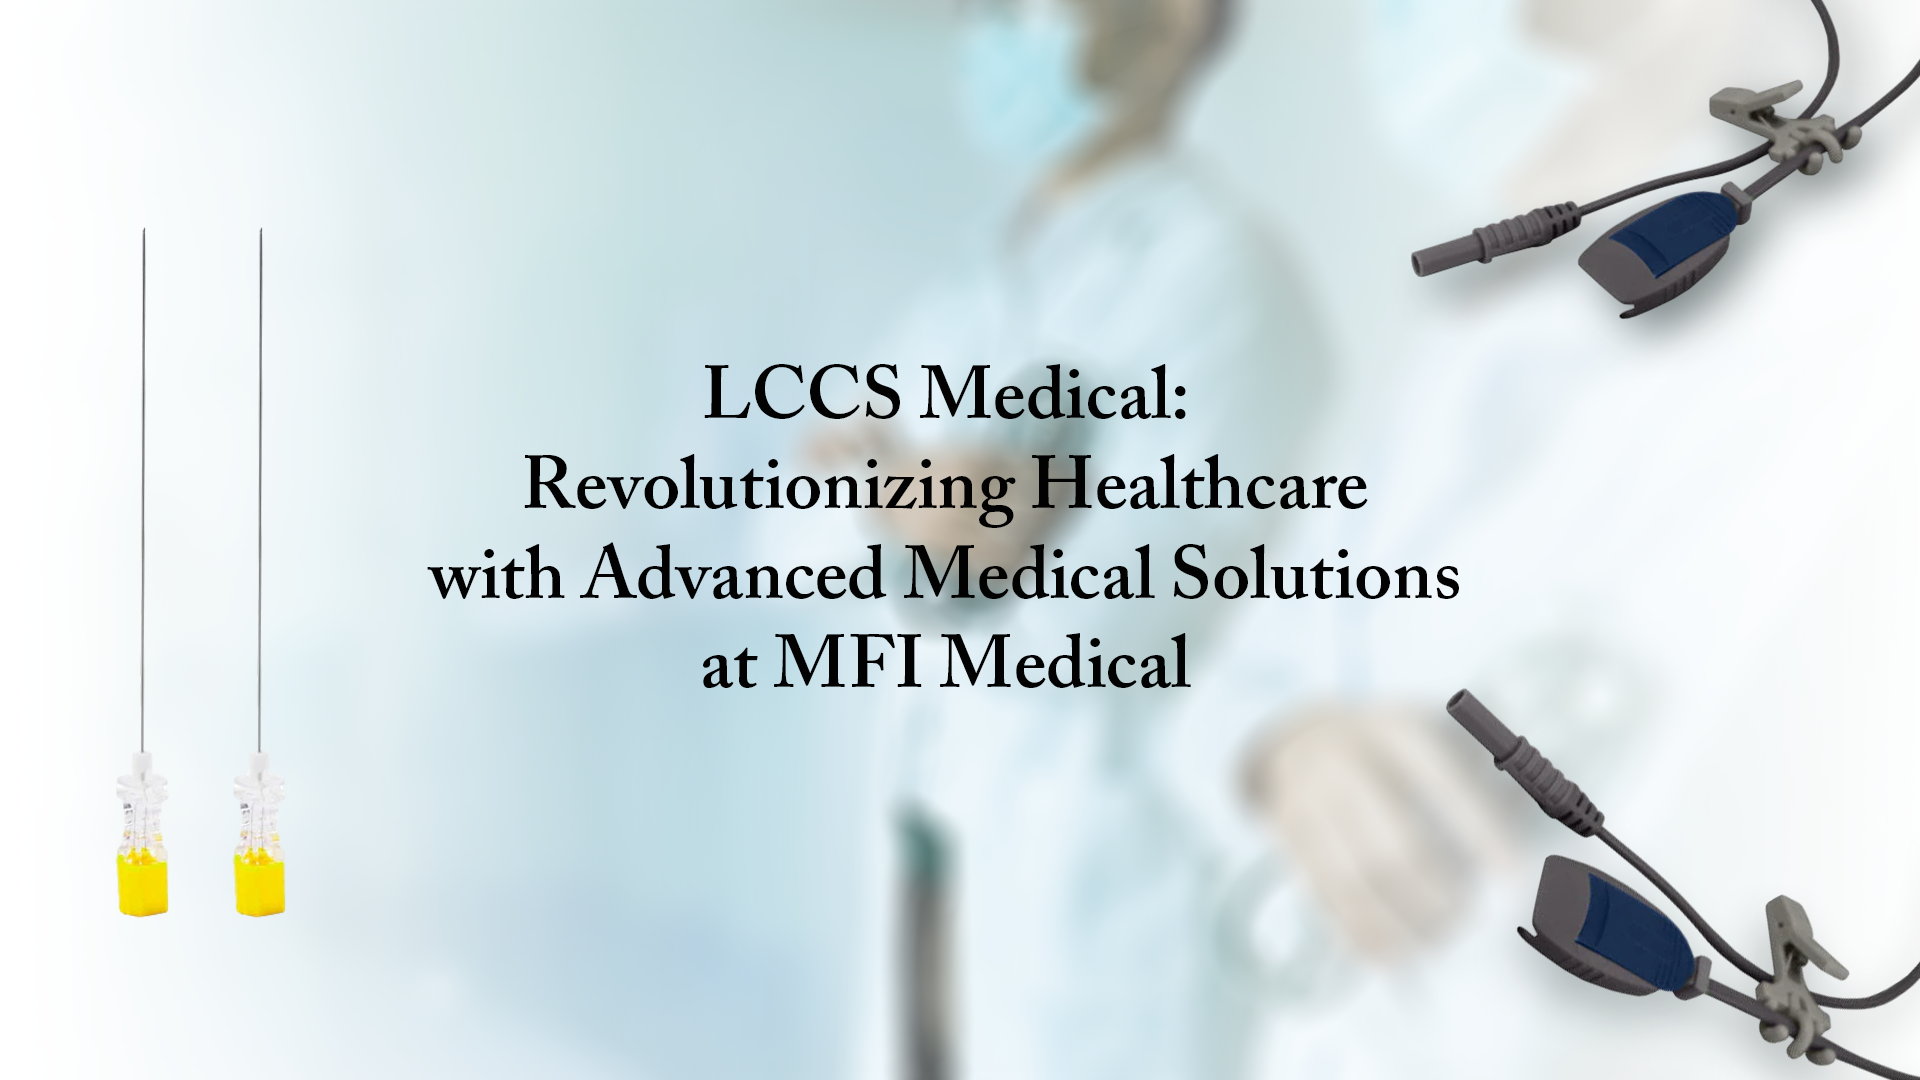 LCCS Medical for Advanced Medical Solutions at MFI Medical